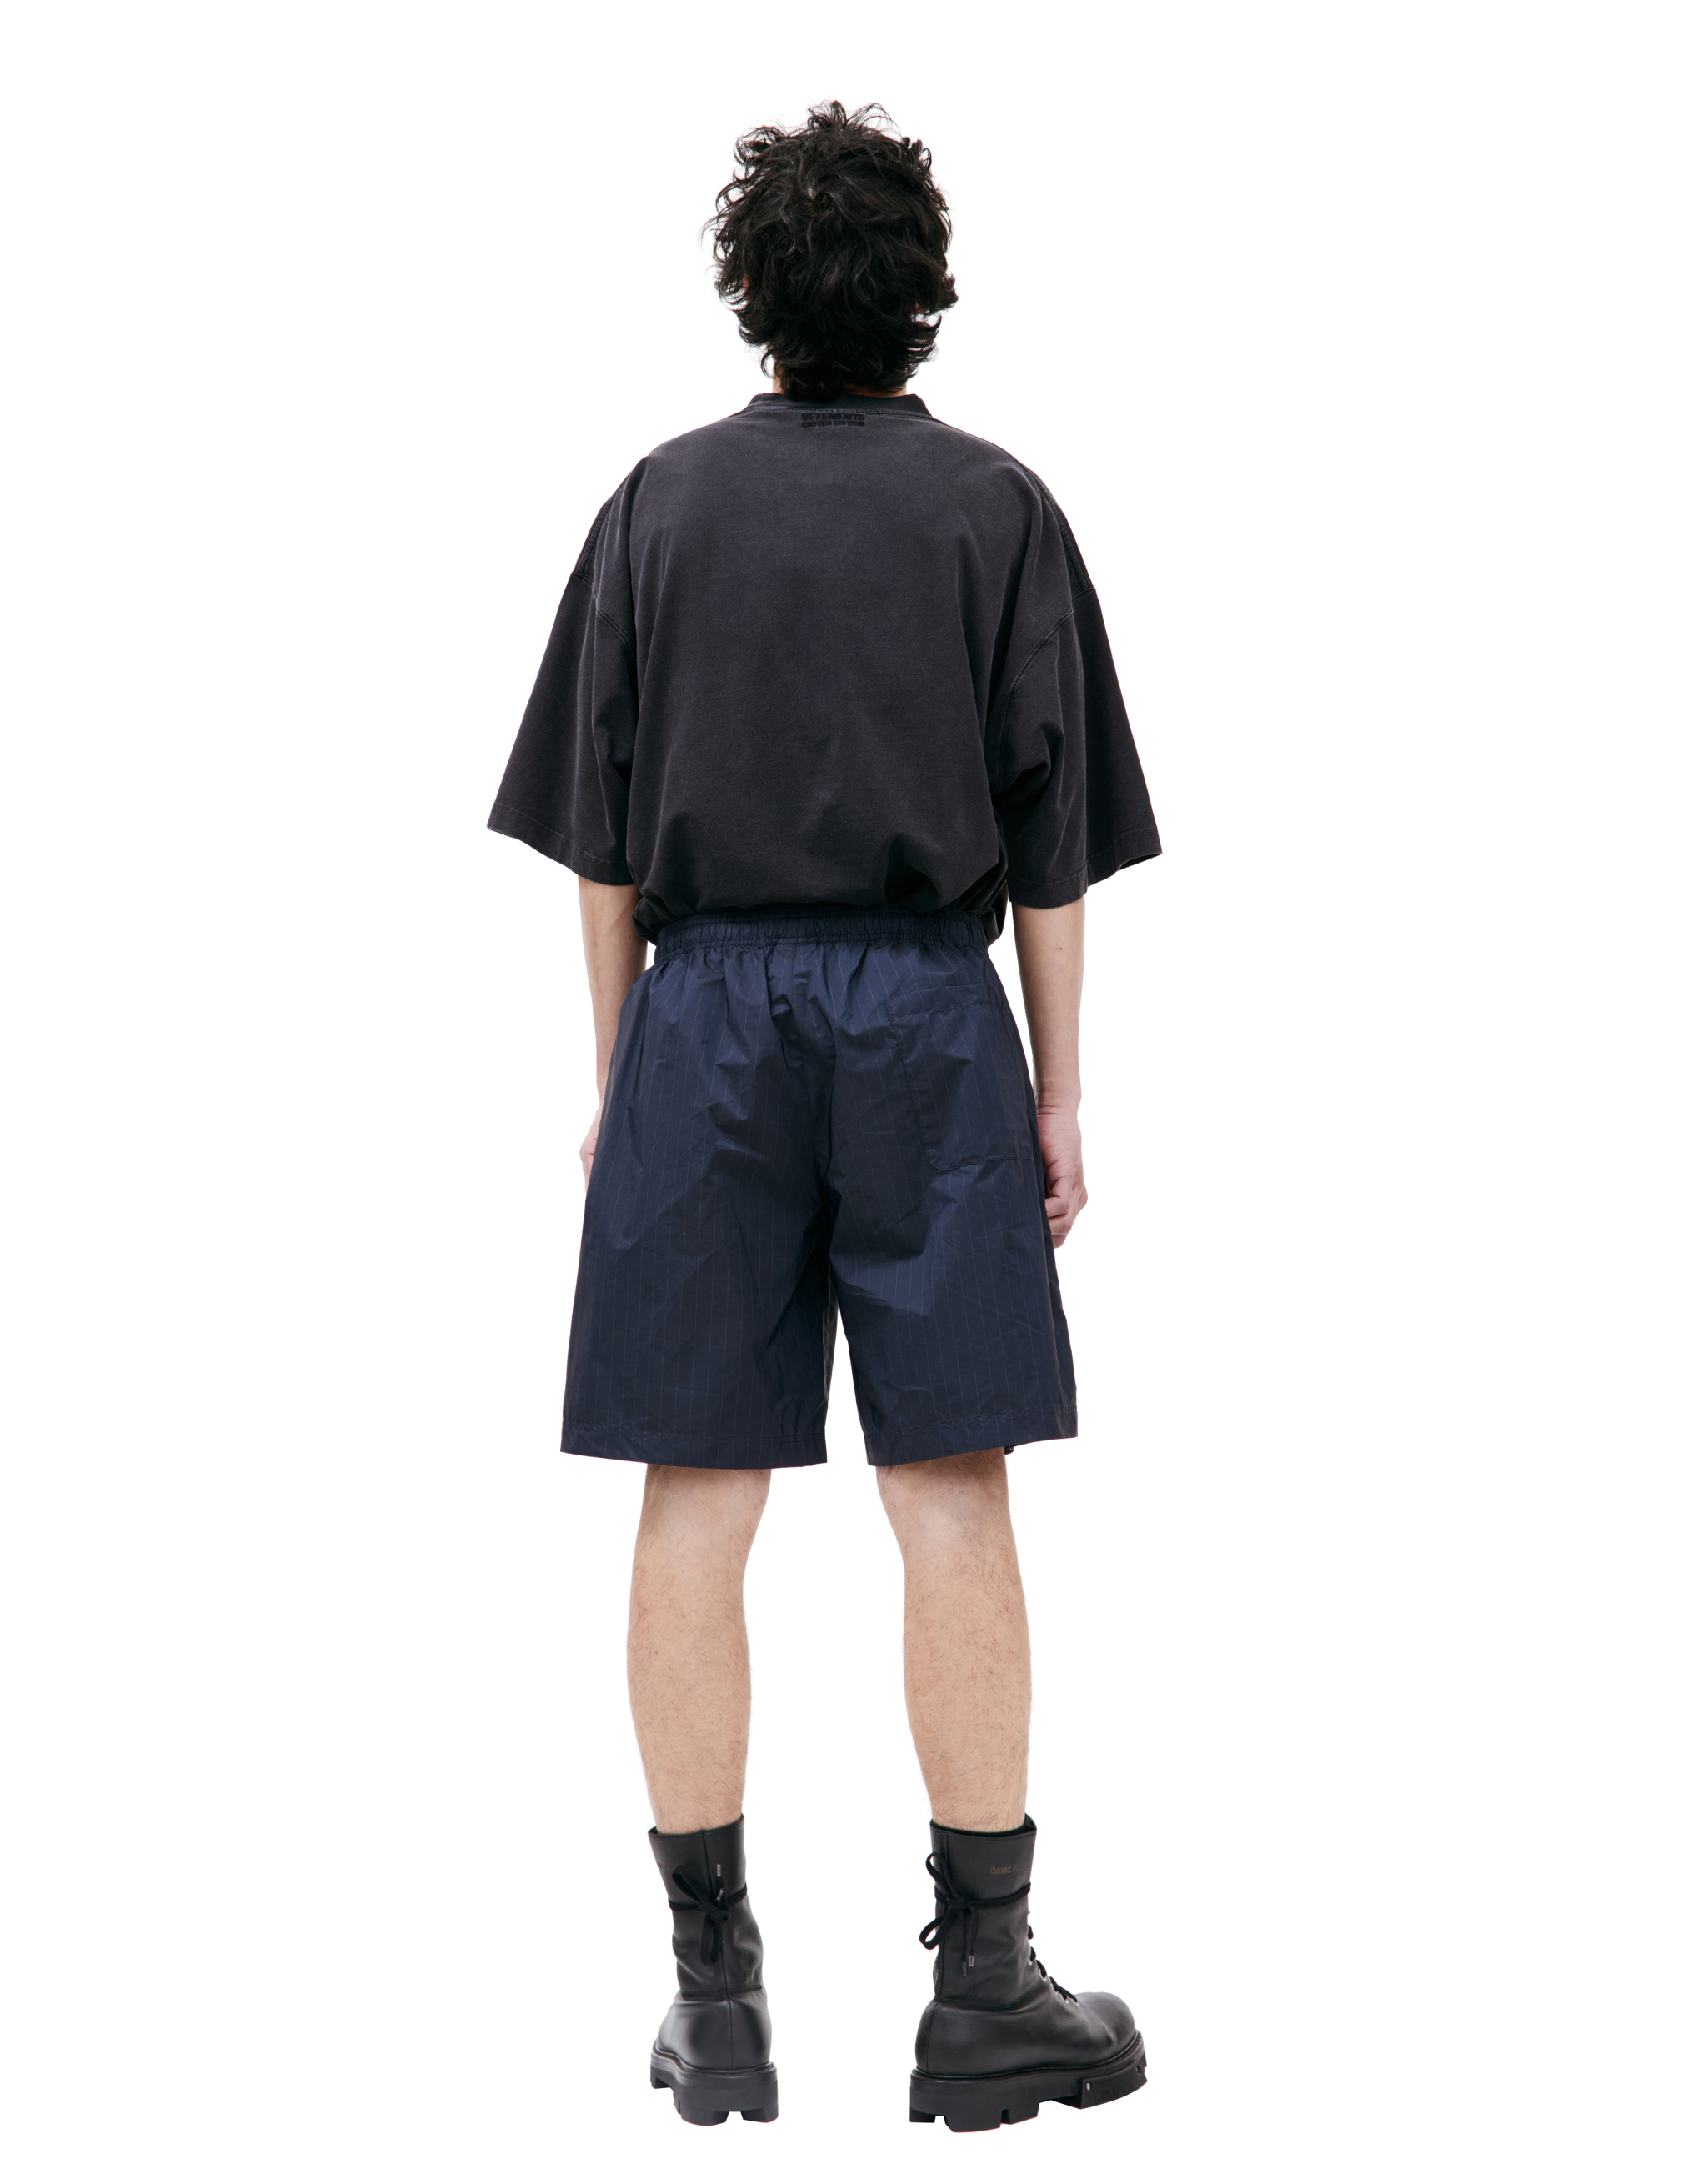 Shop Vetements Navy Blue Striped Shorts